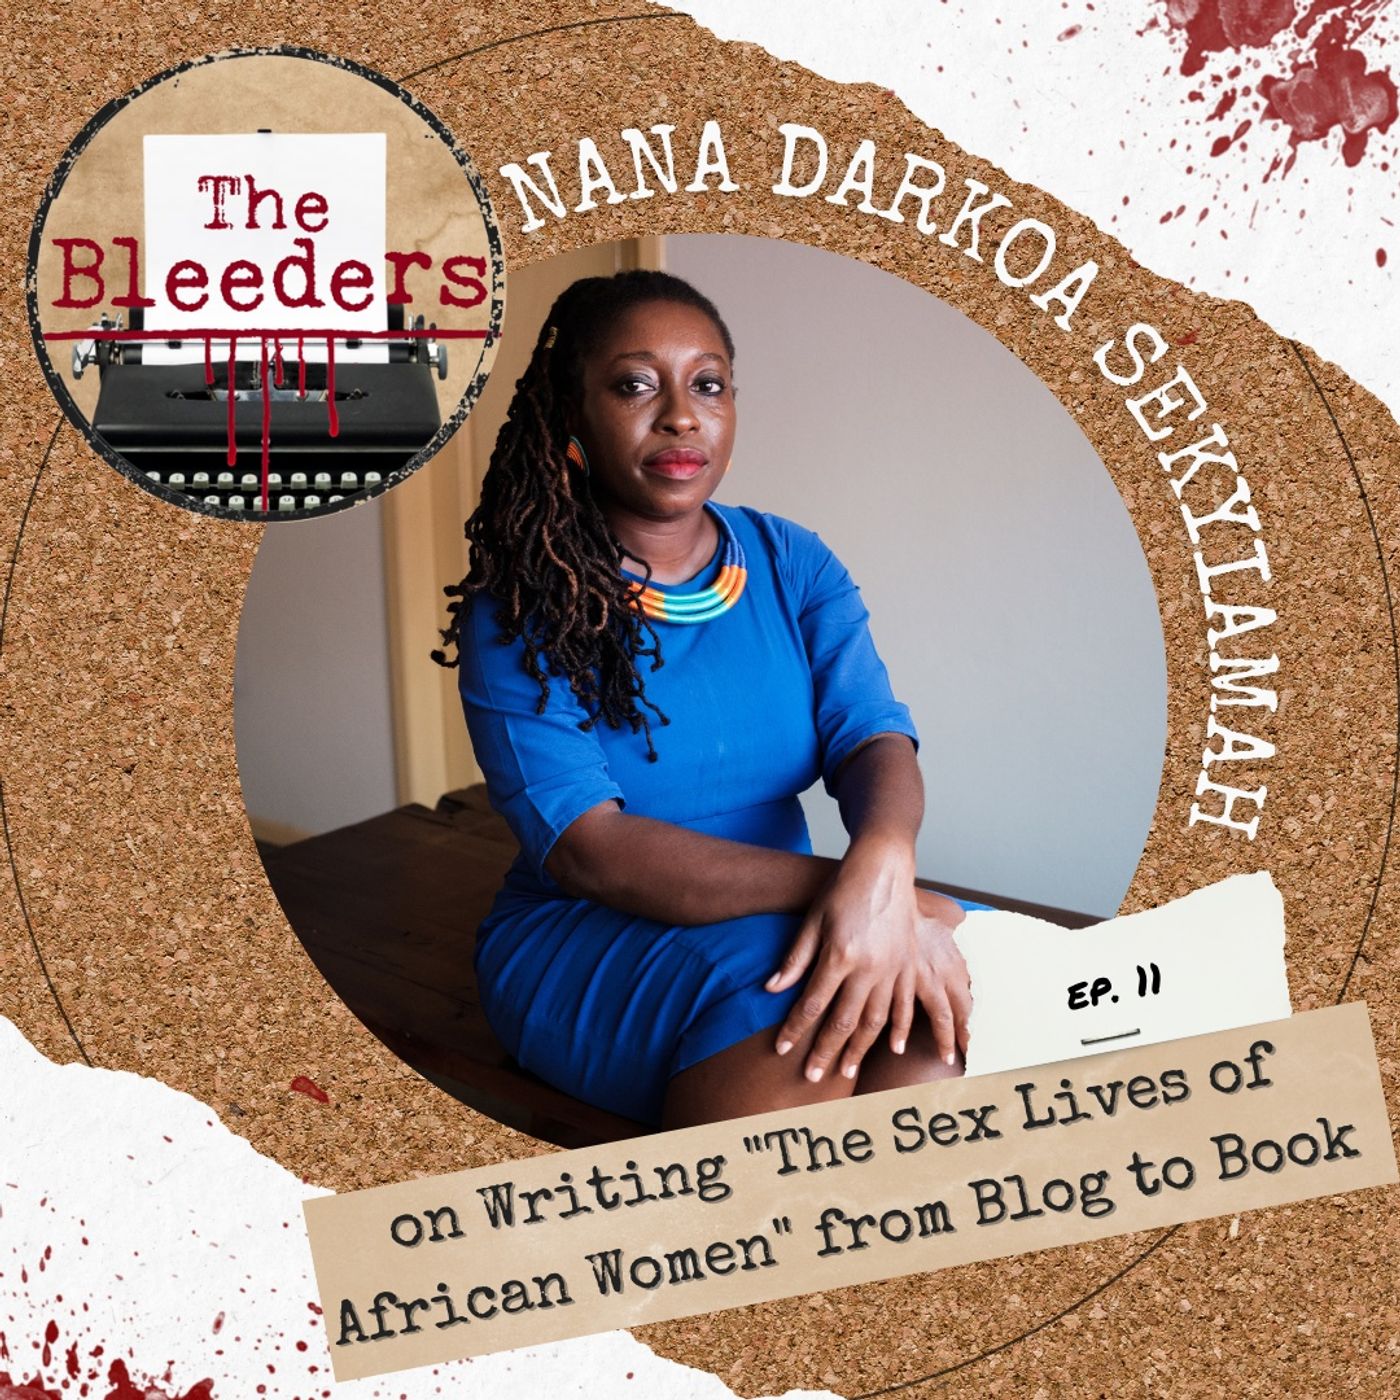 Nana Darkoa Sekyiamah on Writing ”The Sex Lives of African Women” from Blog to Book